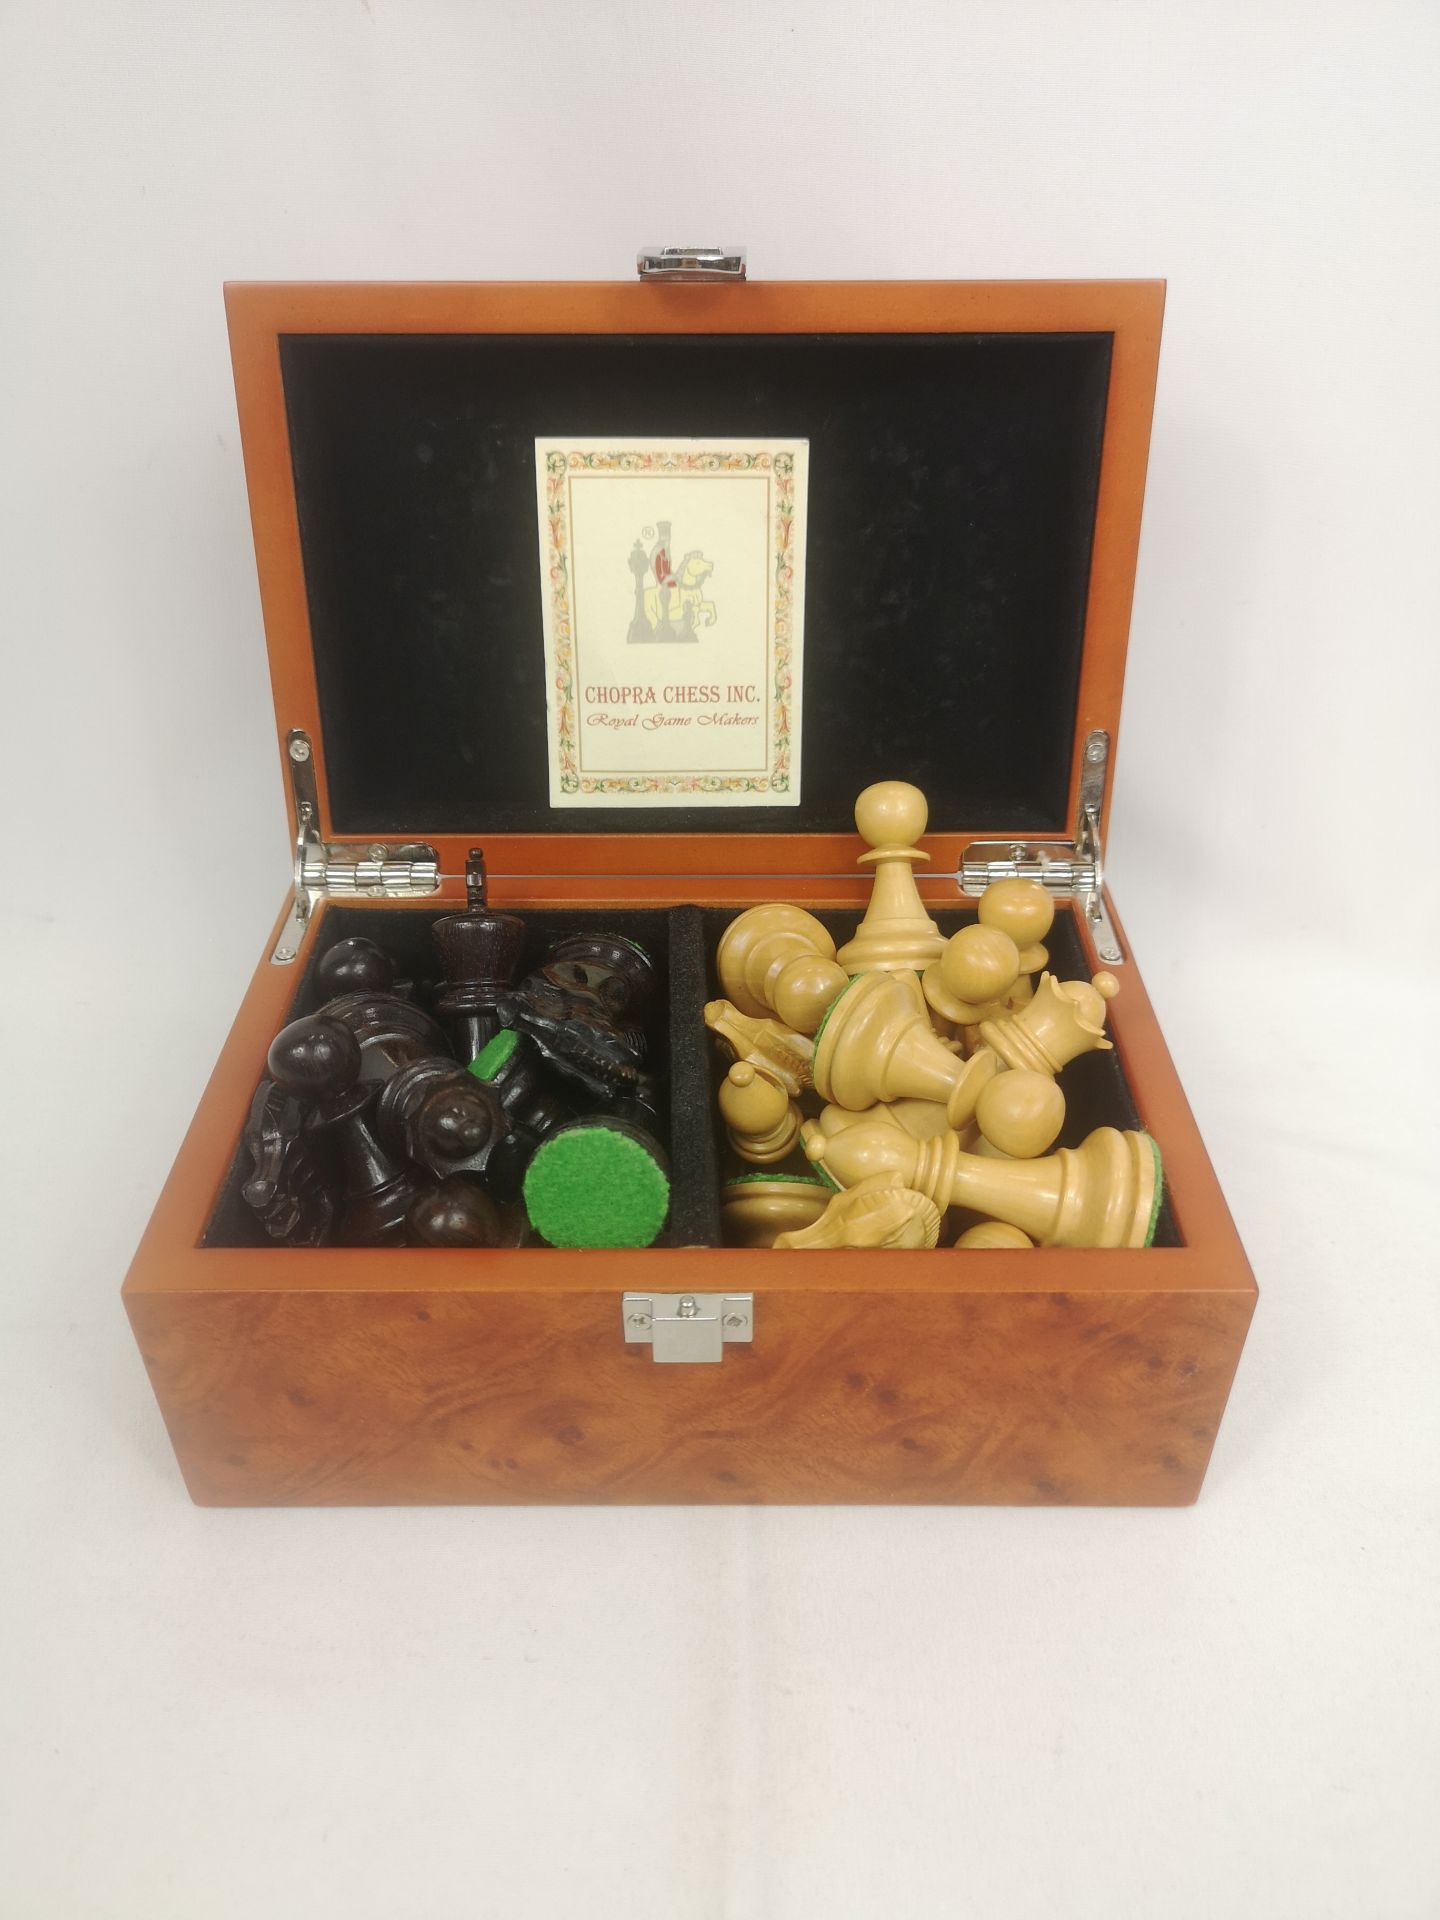 Chopra chess set in box